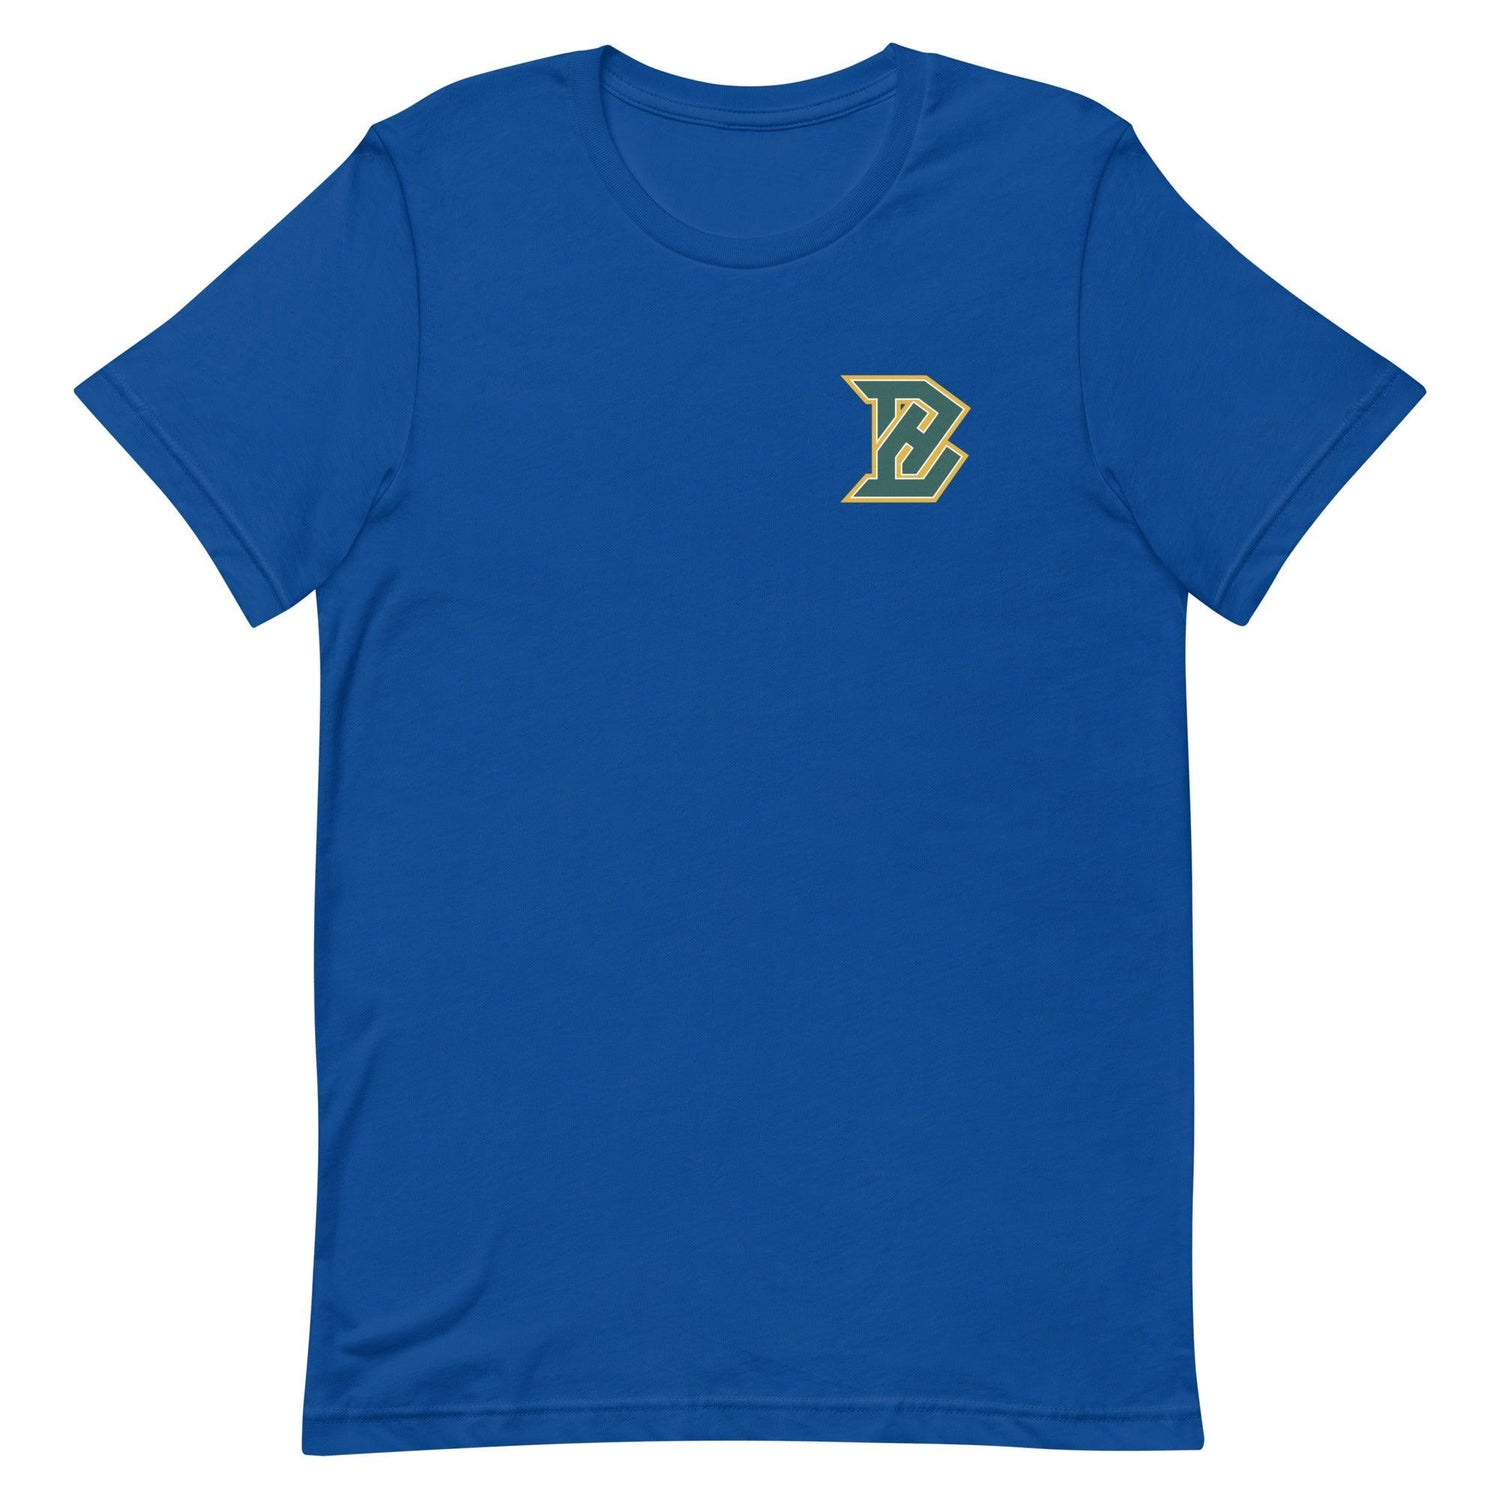 Brent Honeywell "Essential" t-shirt - Fan Arch